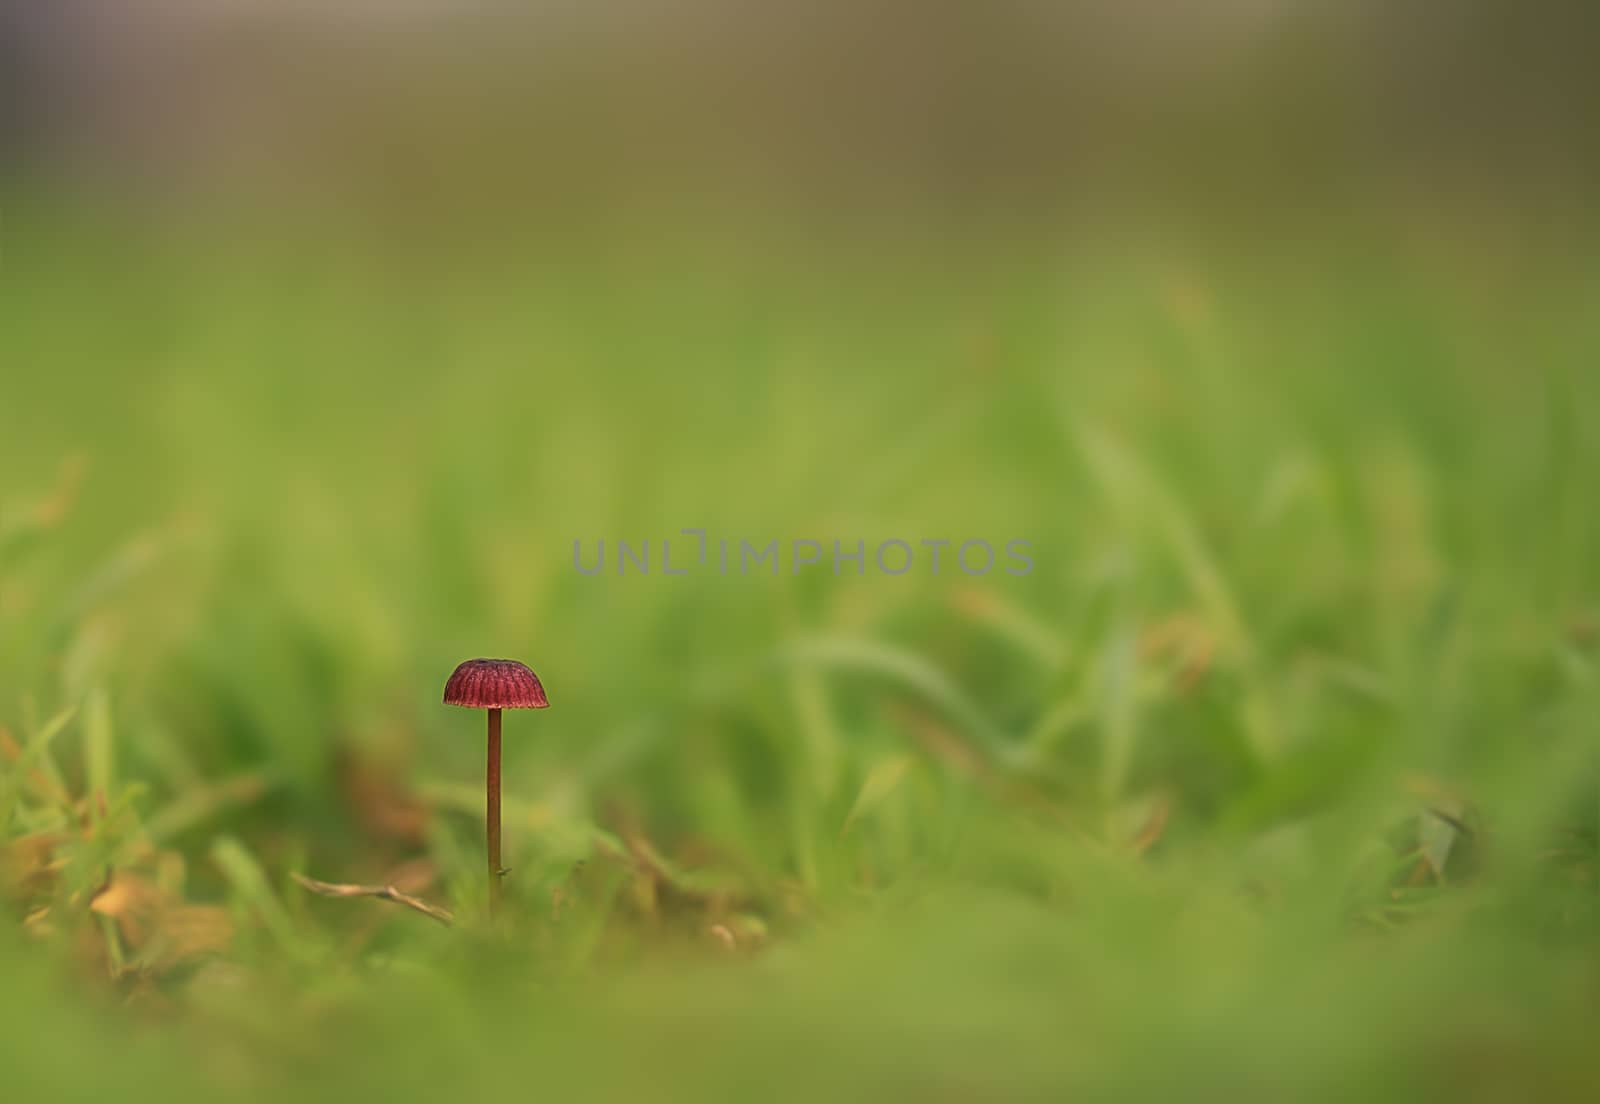 Minimalism Single Mushroom in Field by sherj